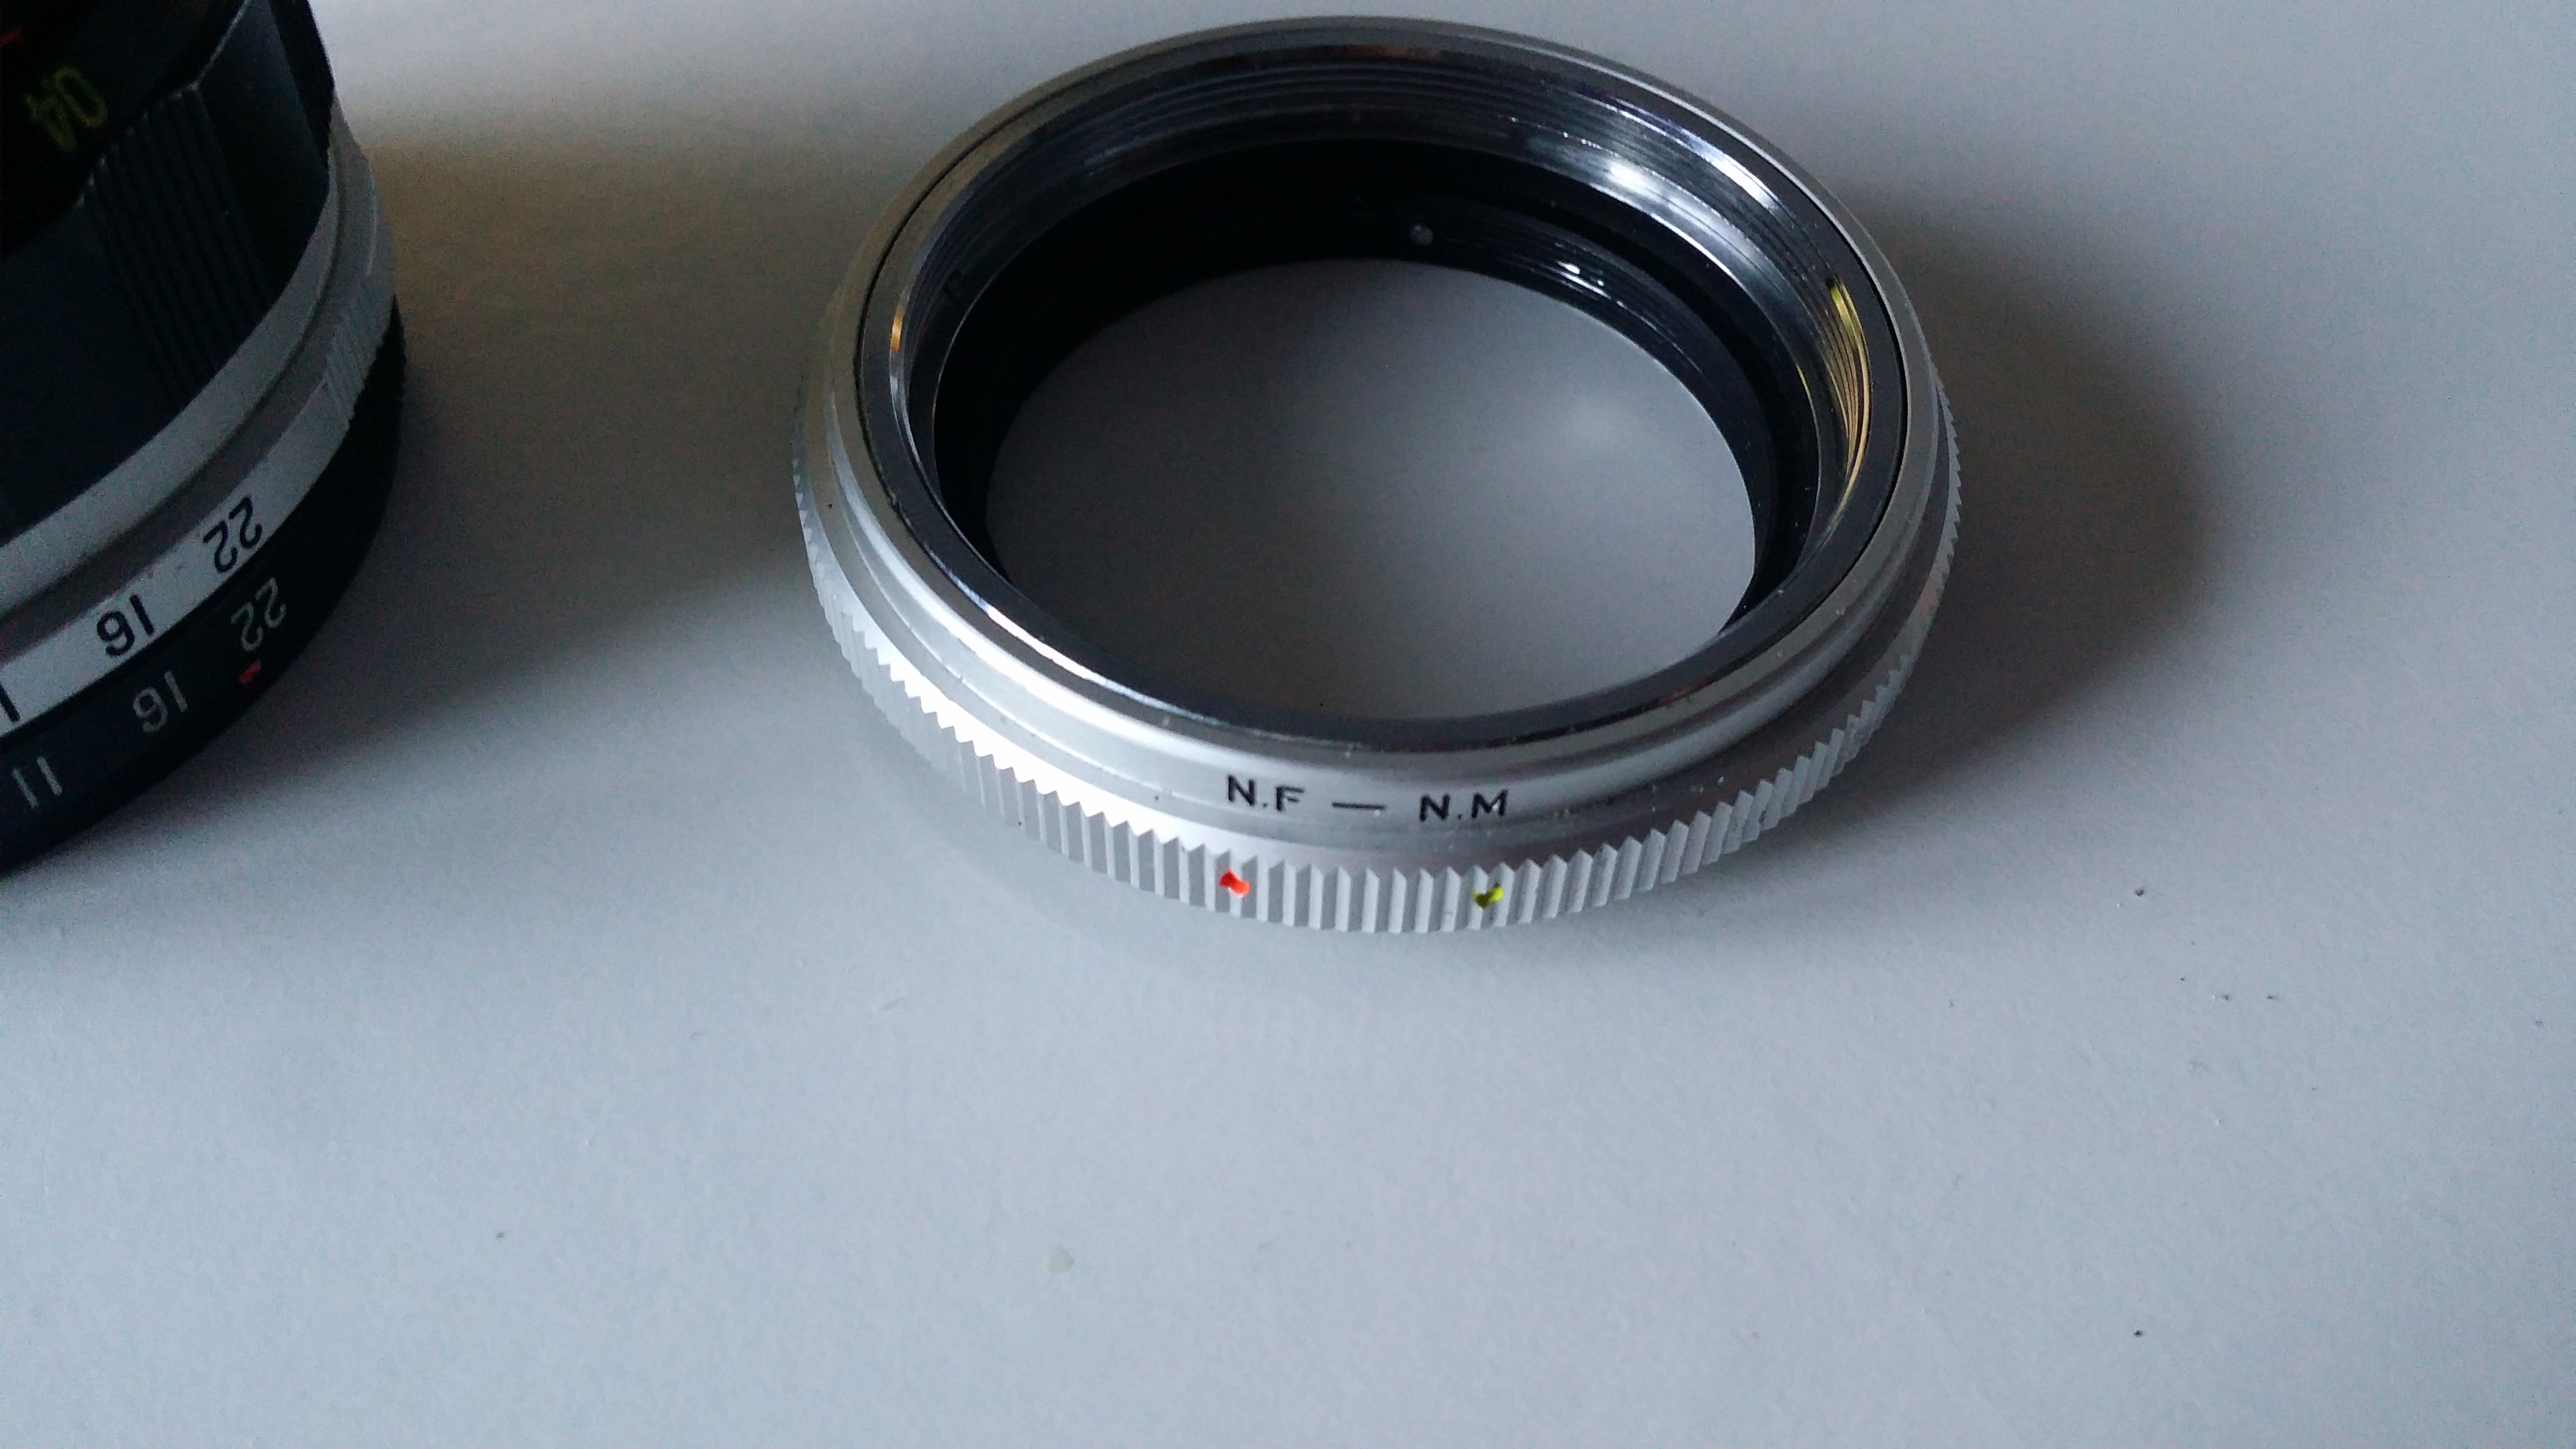 Help in identifying Sankyo Kohki W-Komura f3.5 28mm Lens Mou